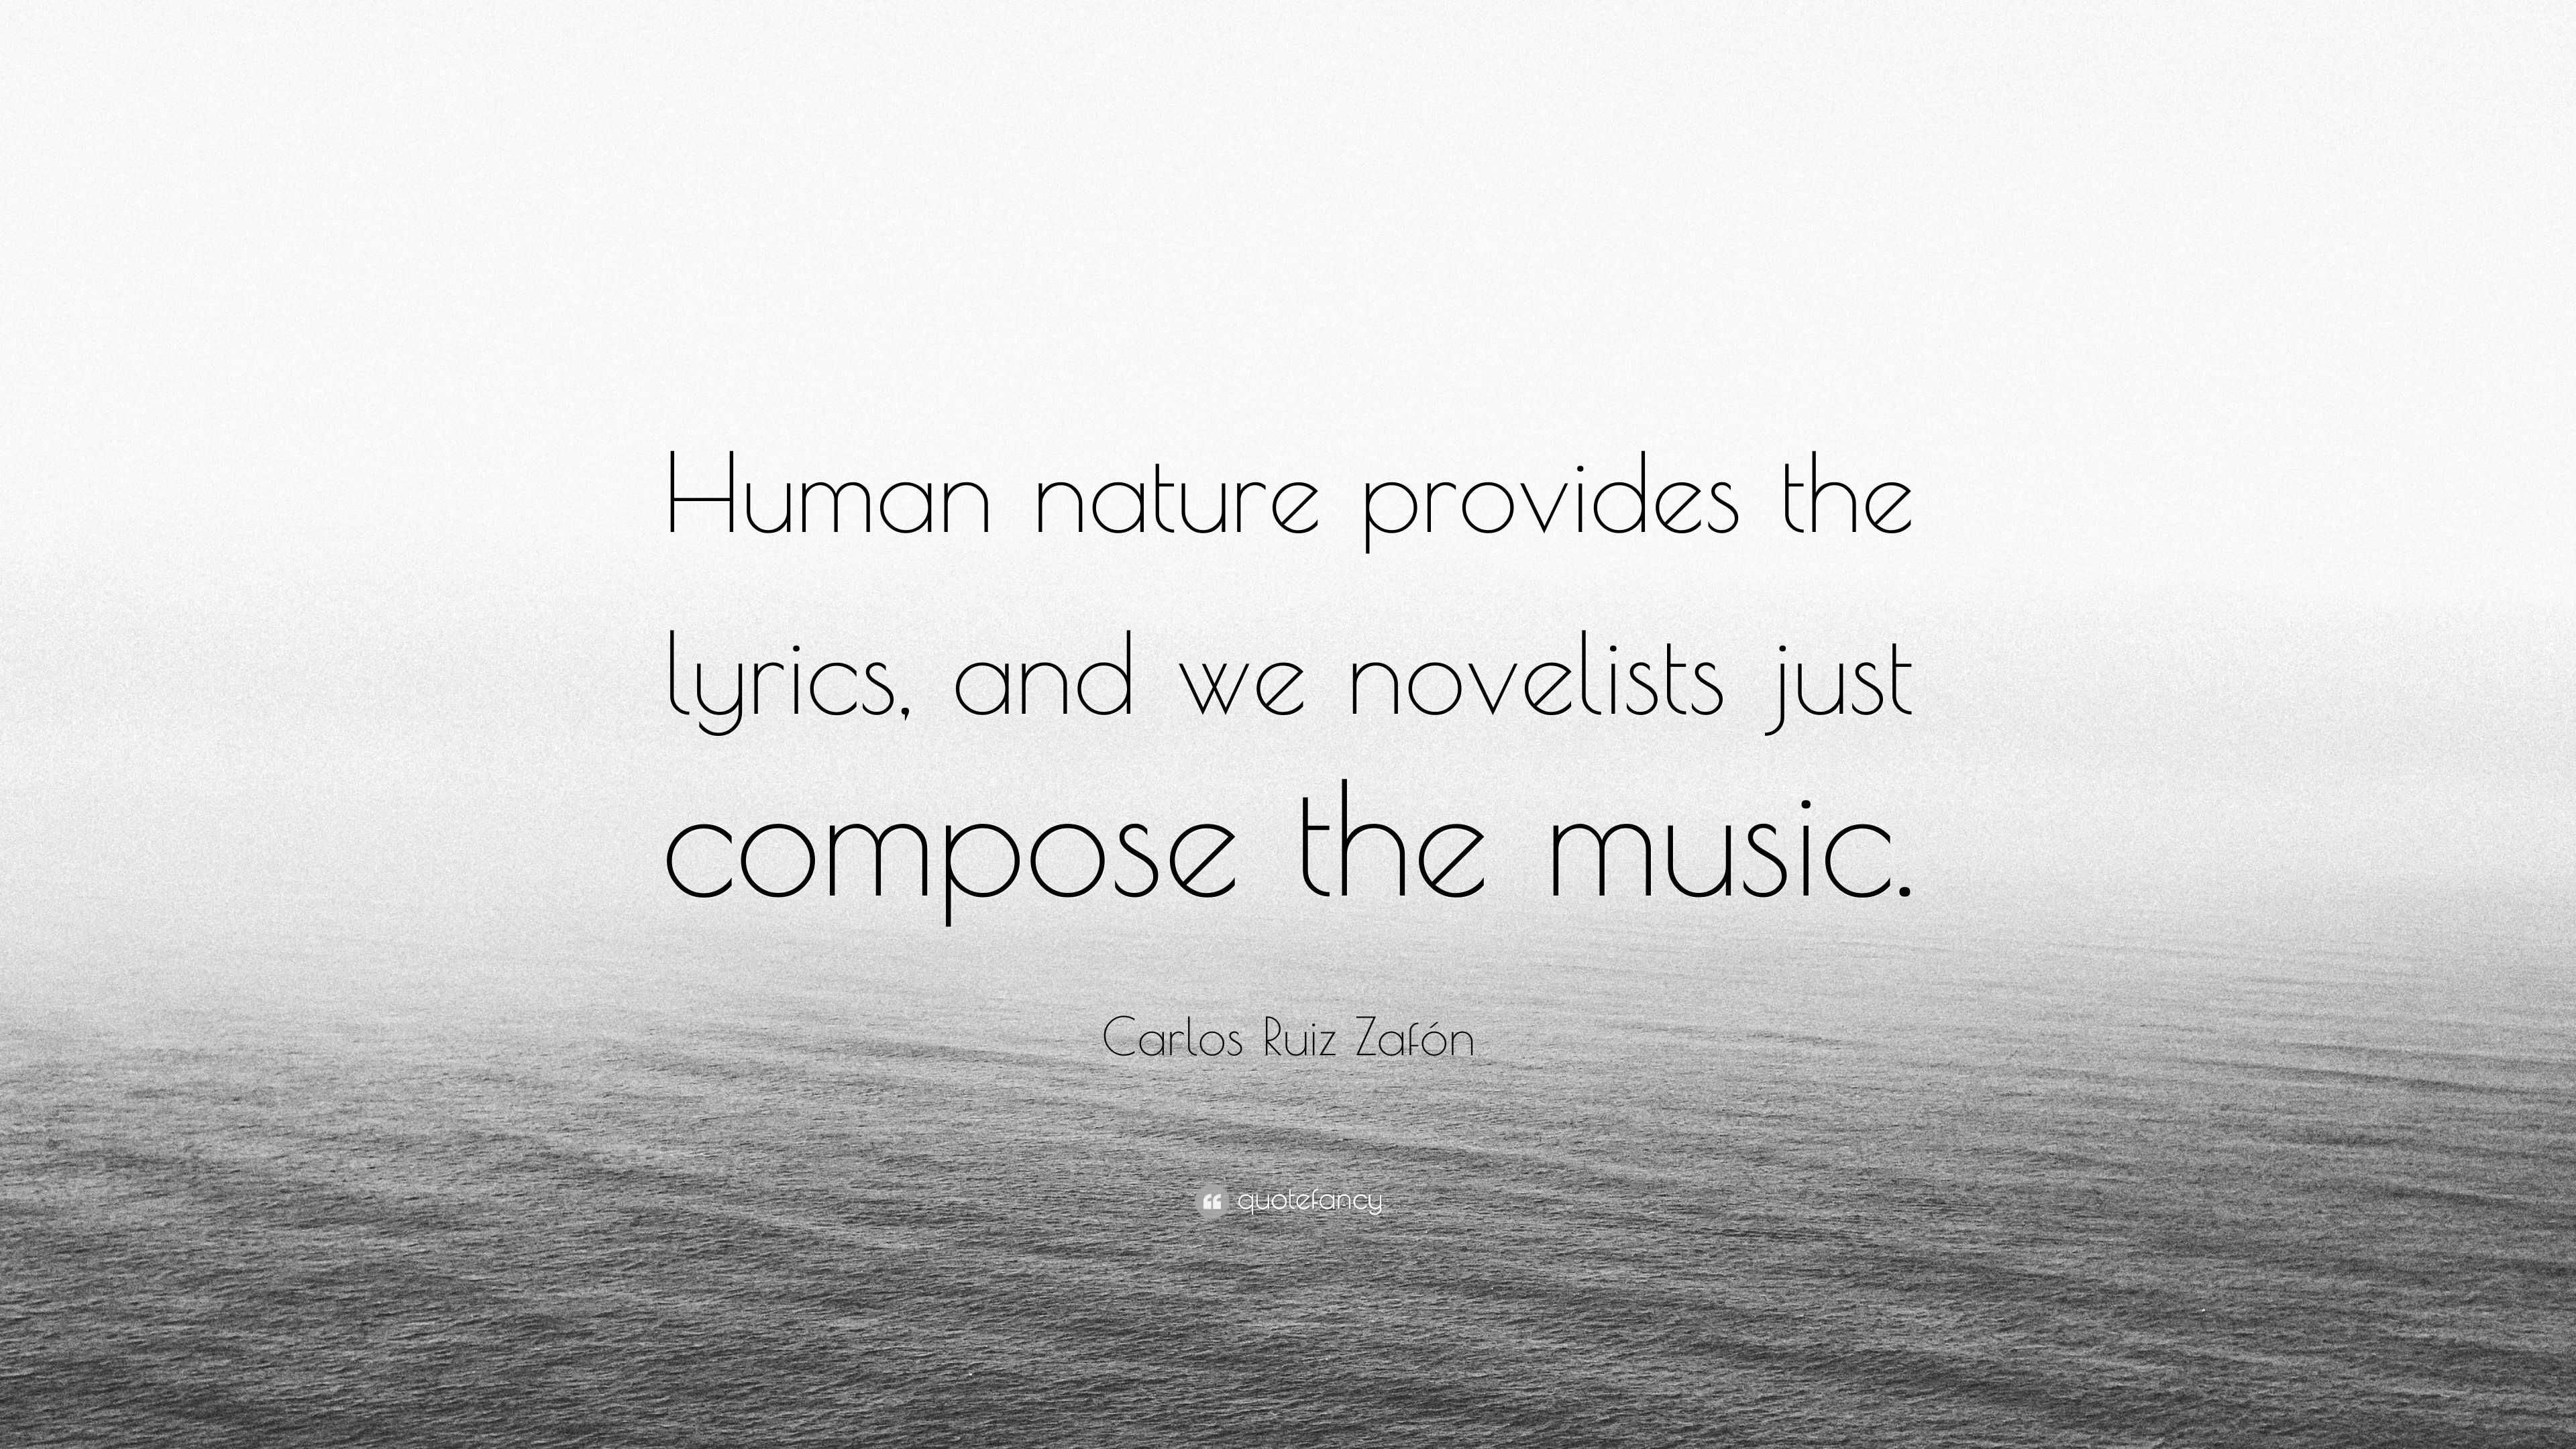 Carlos Ruiz “Human nature provides lyrics, and we novelists just compose the music.”